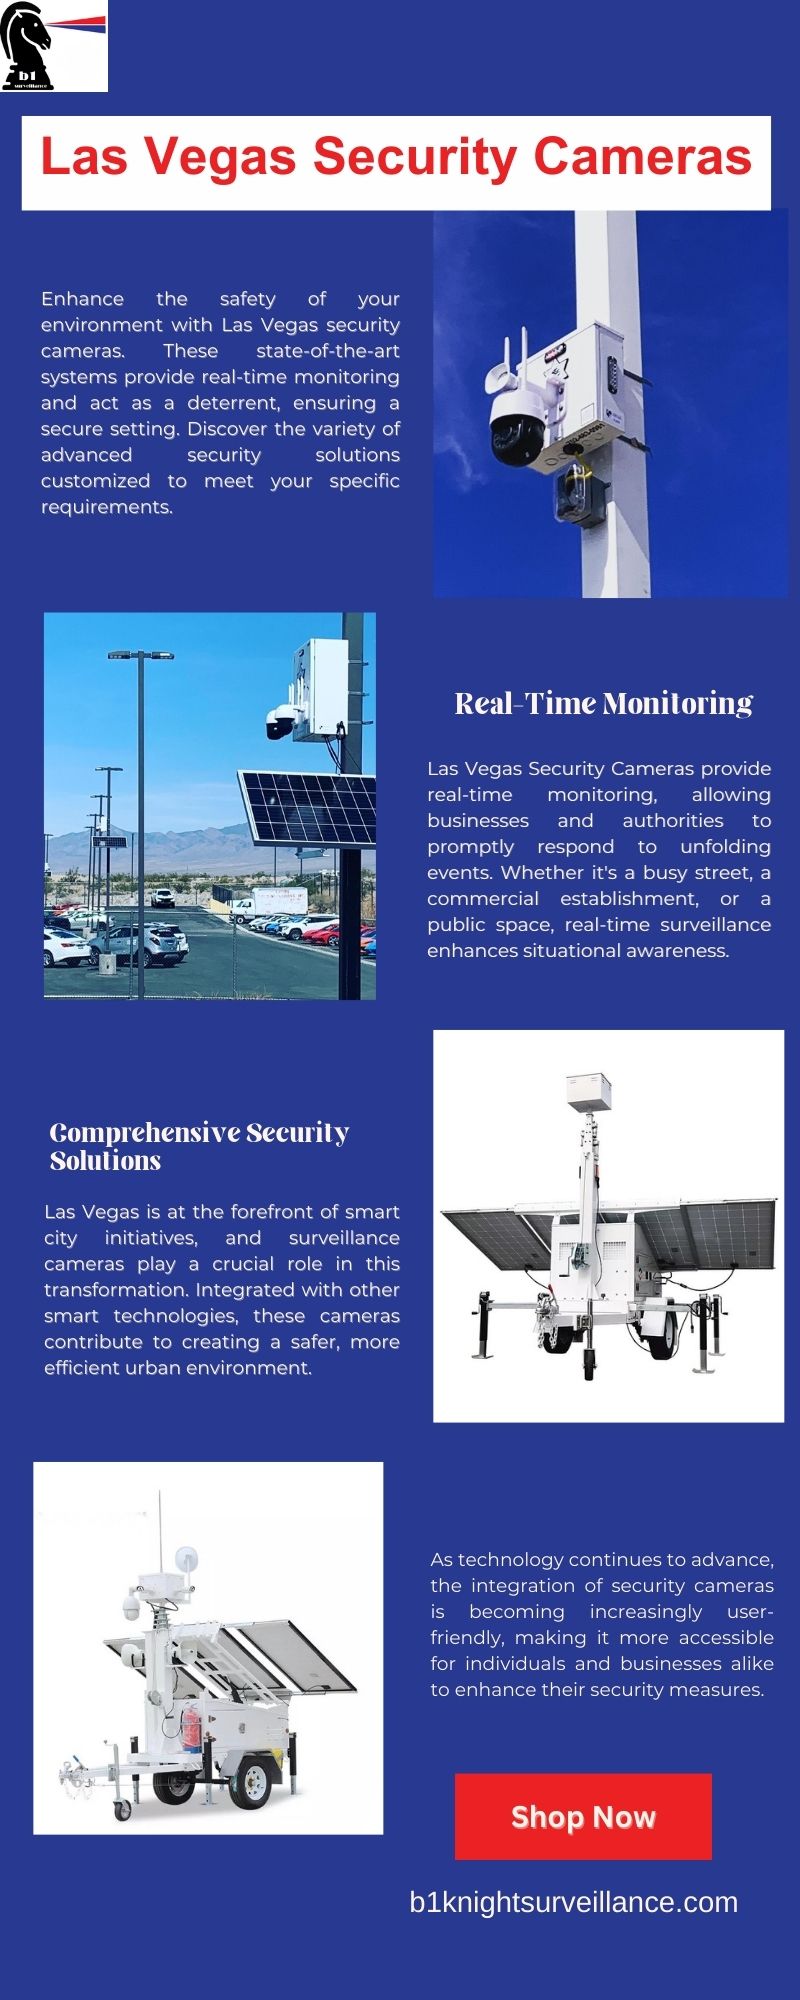 Las Vegas Security Cameras Blank Meme Template